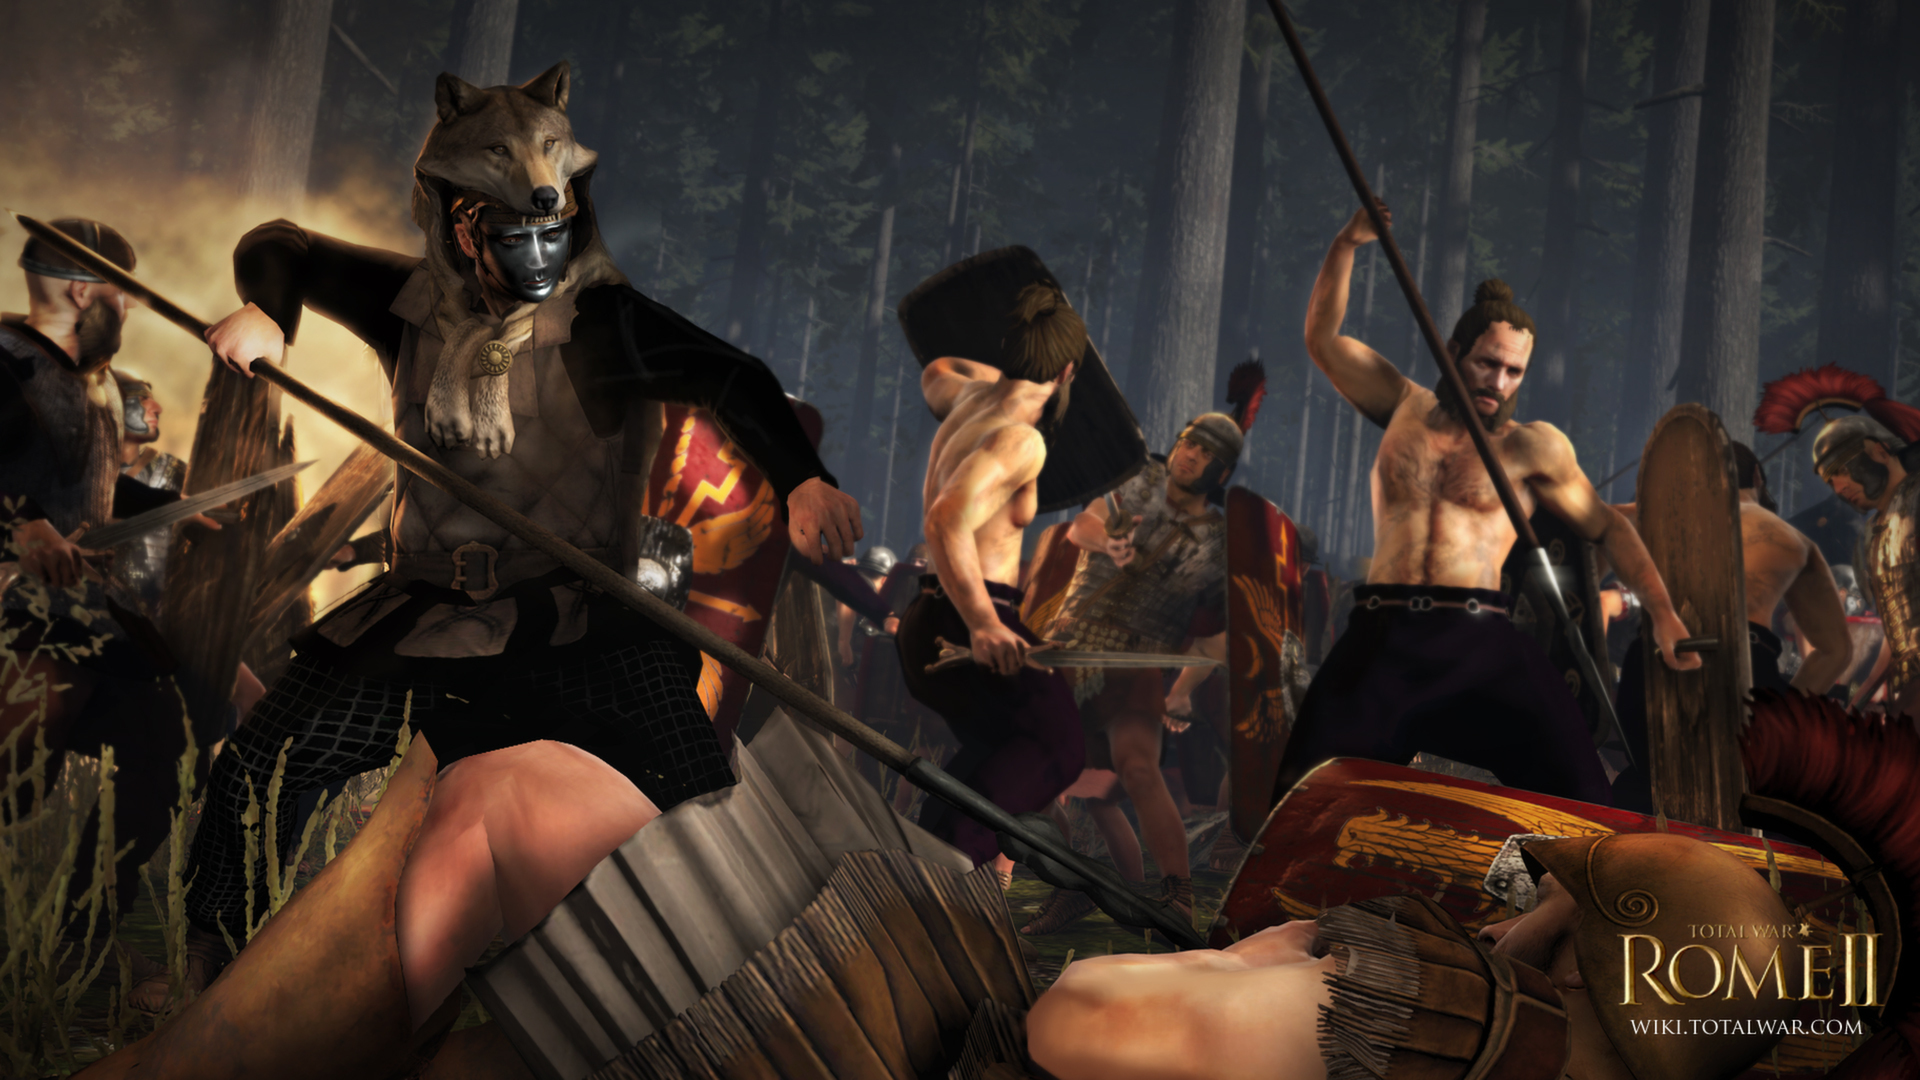 Total war rome action fantasy warrior armor battle wallpapers hd desktop and mobile backgrounds